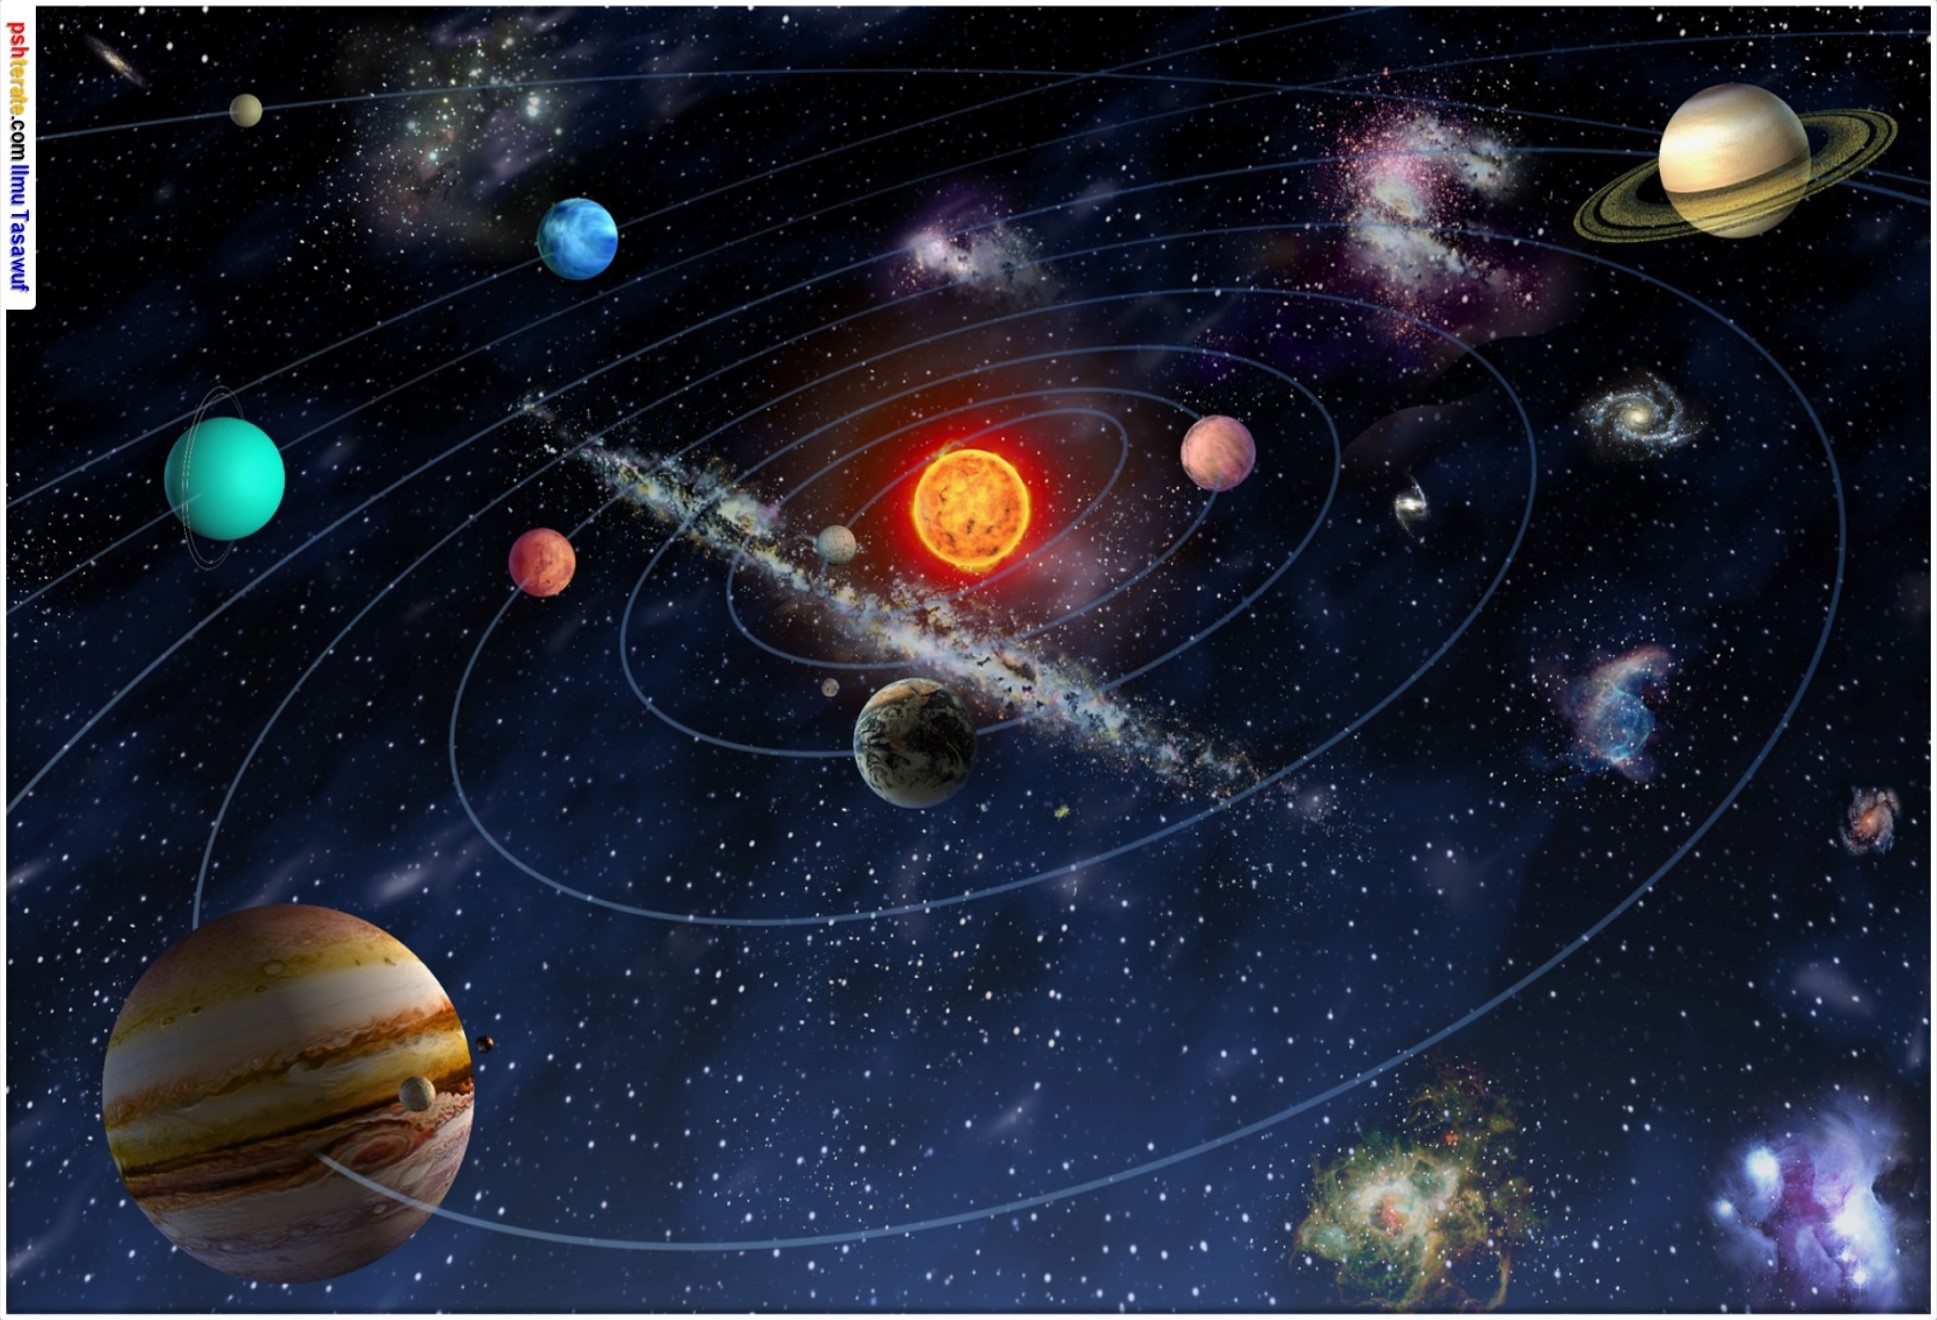 <a href="https://www.pshterate.com/"><img src="Ilmu Tasawuf Macrocosmic Universe Solar System.jpg" alt="Ilmu Tasawuf"></a>